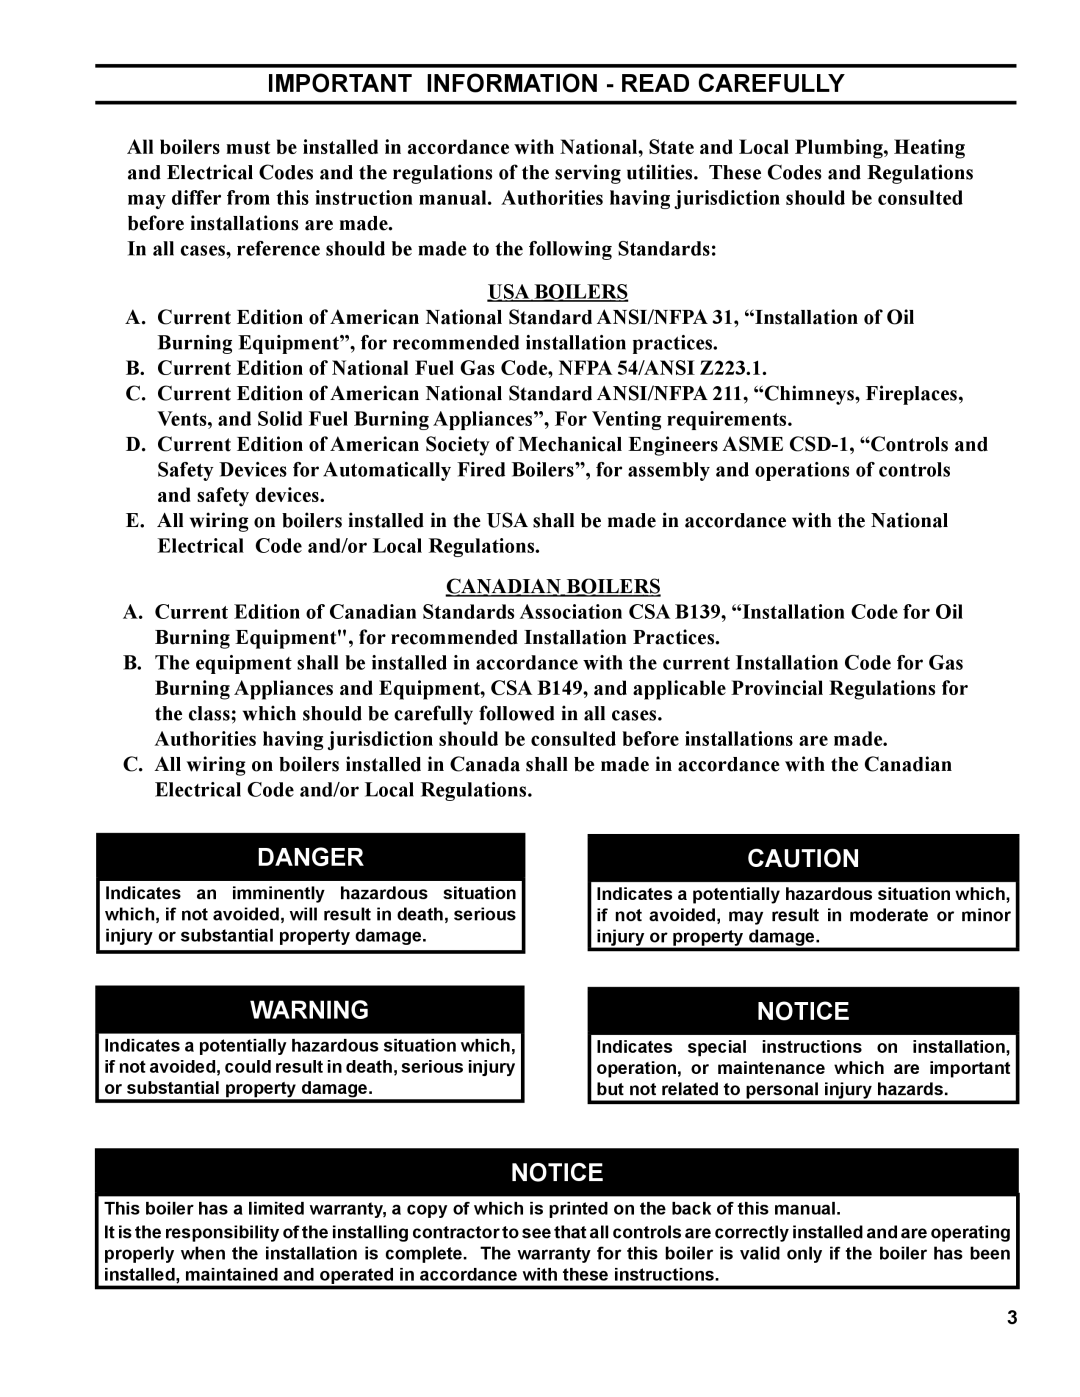 Burnham V9A manual Important Information Read Carefully, USA Boilers 